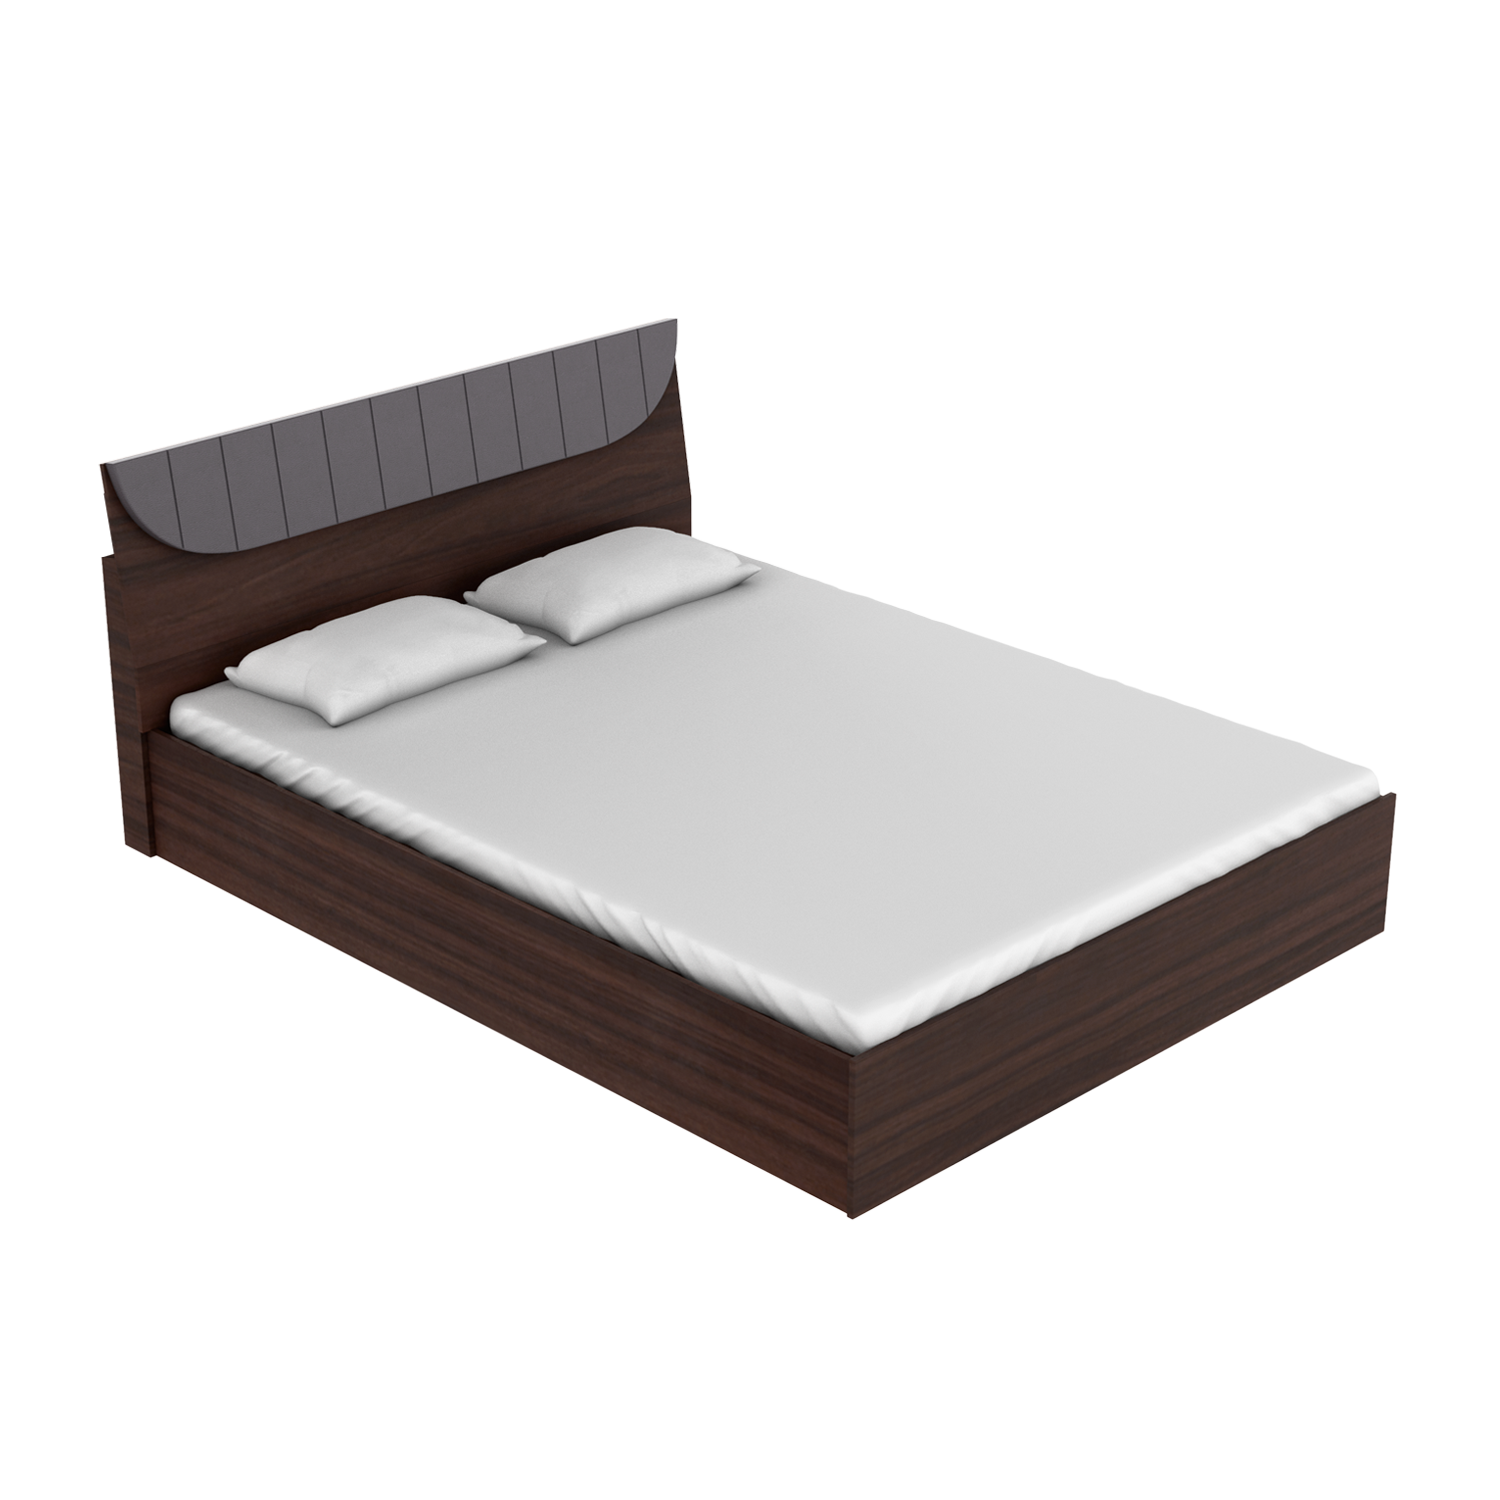 Rej Highlands King Size Bed, Strong King Size Bed